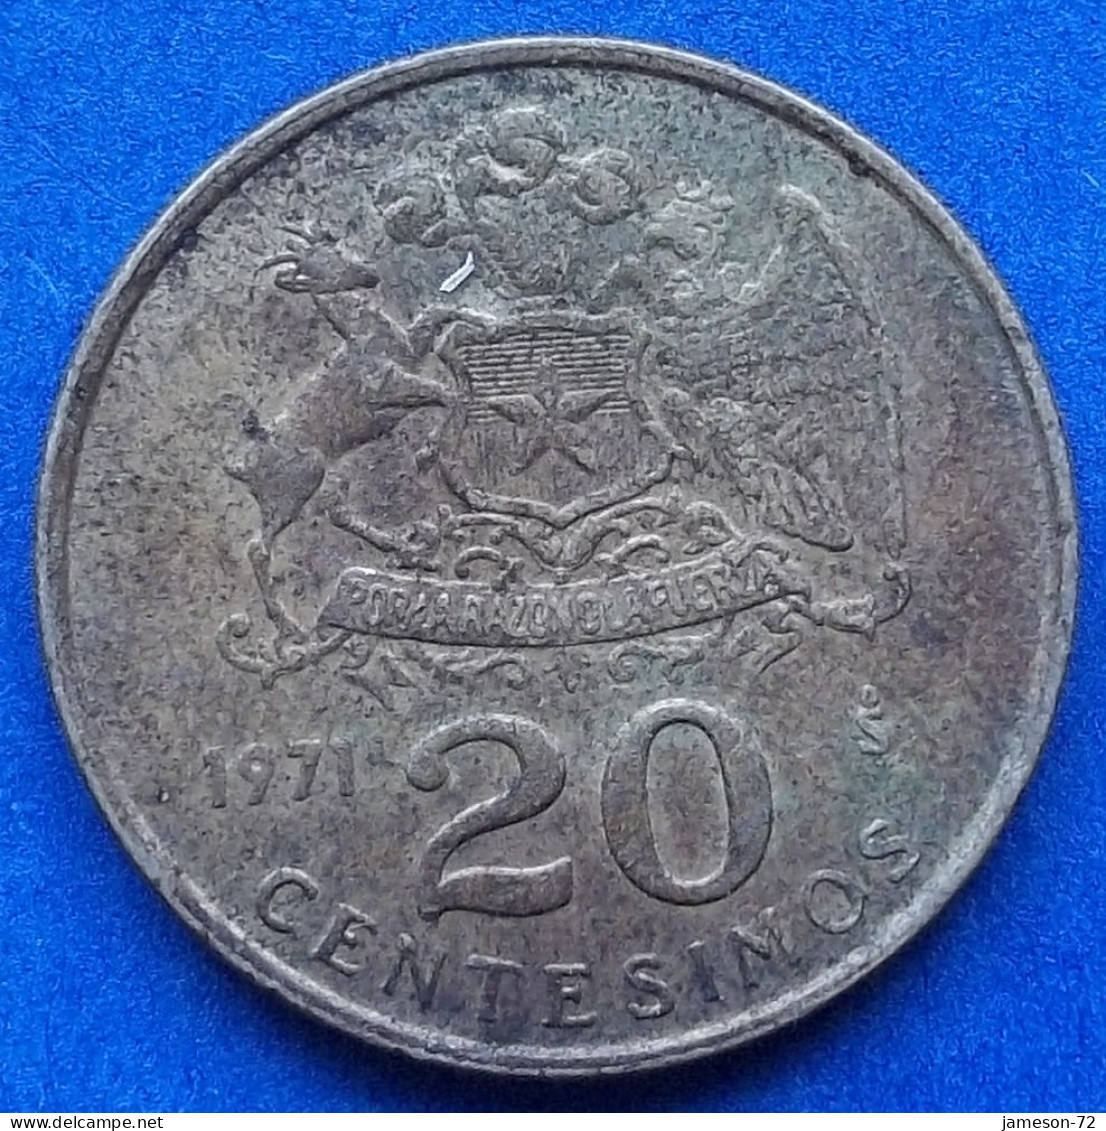 CHILE - 20 Centesimos 1971 "Jose Manuel Balmaceda" KM# 195 Monetary Reform (1960-1975) - Edelweiss Coins - Chili